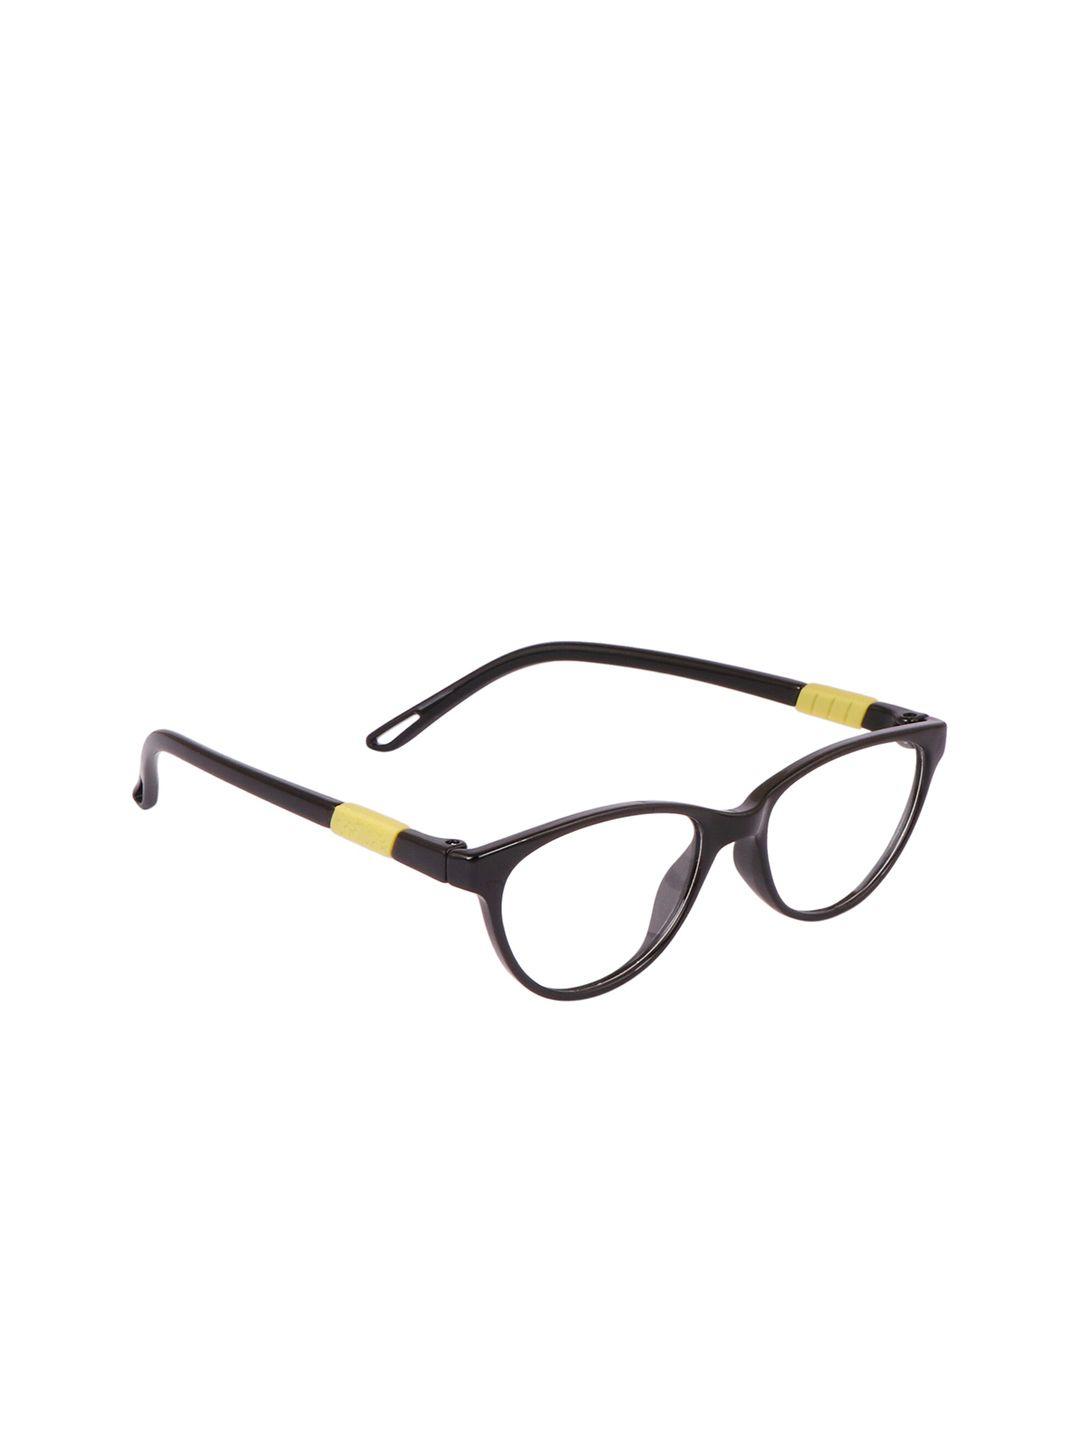 optify unisex clear lens & black cateye sunglasses poppin cateye black yellow small